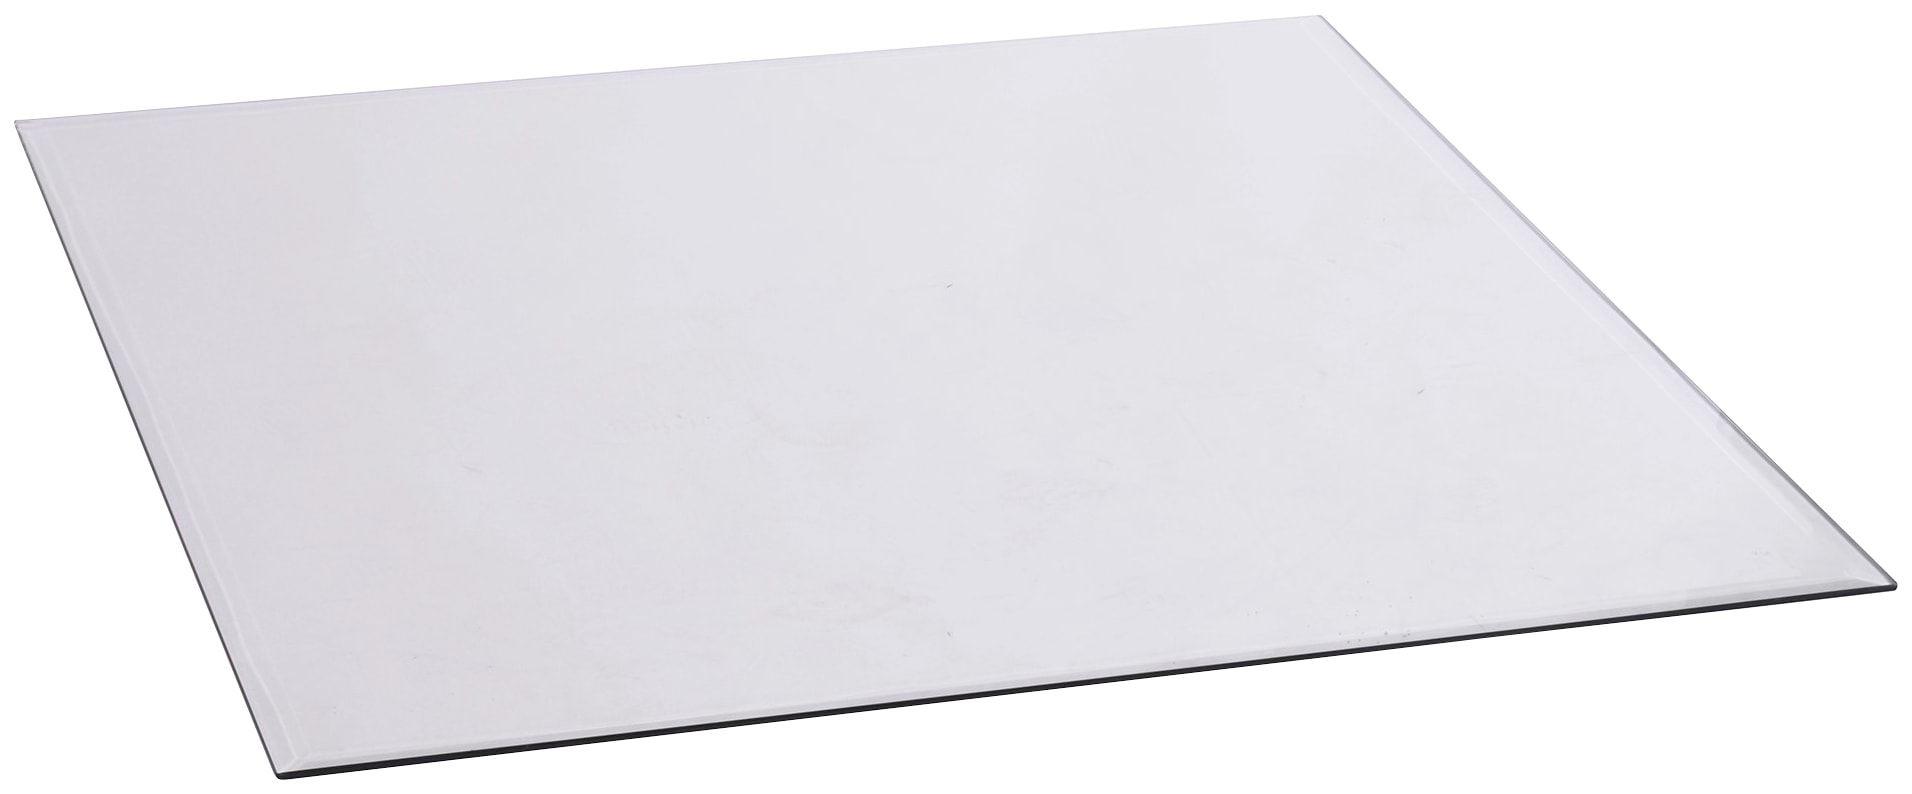 Firefix Bodenschutzplatte, BxL: 110x110 cm, 8 mm, quadratisch